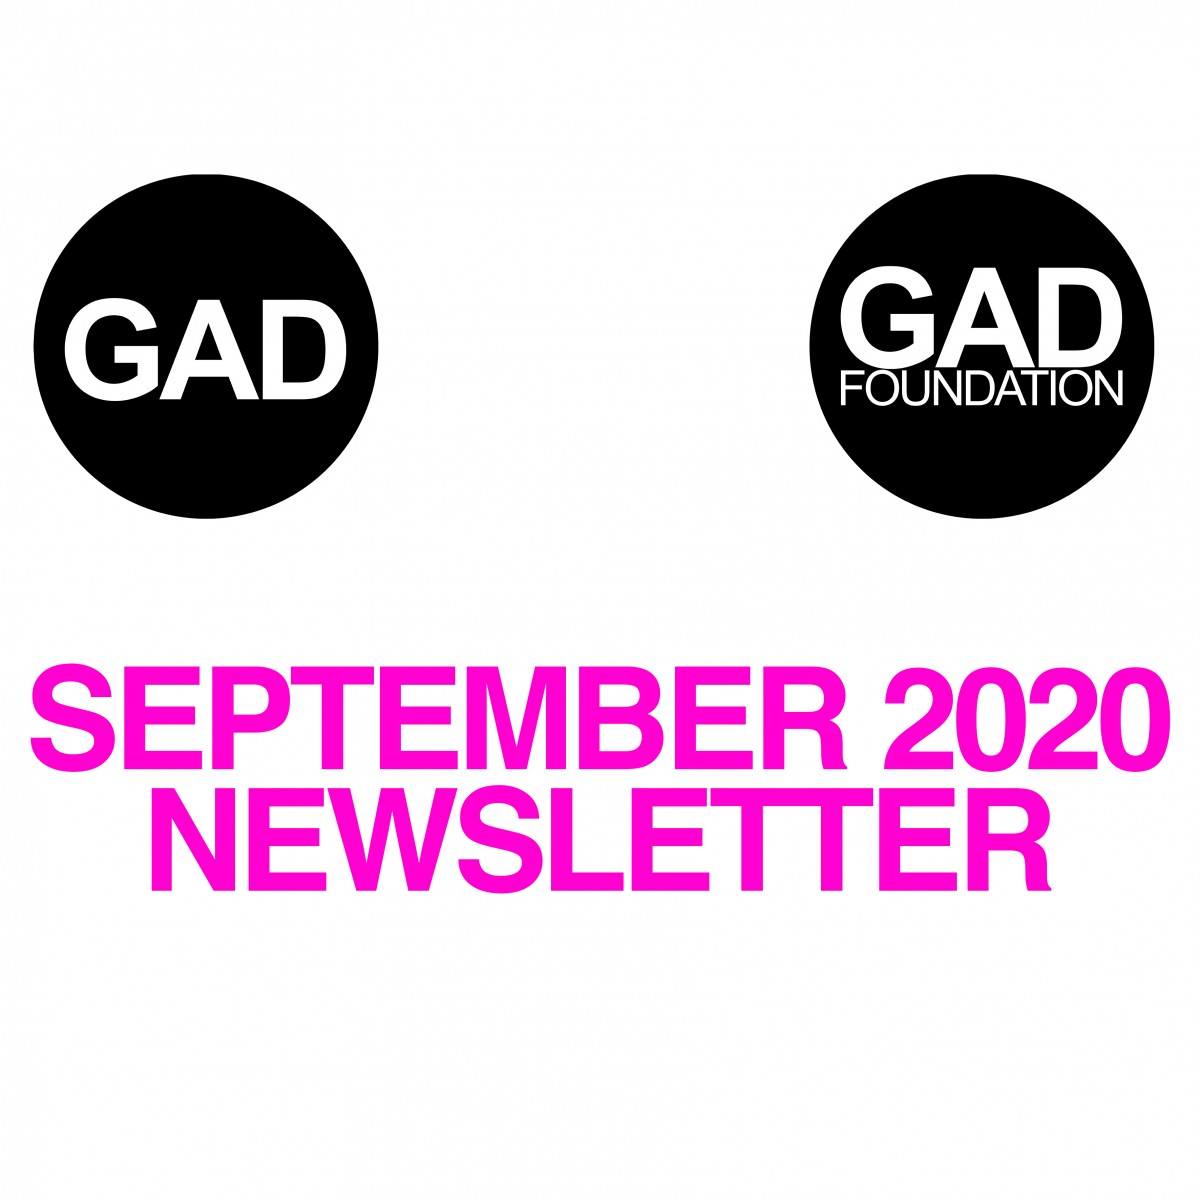 Eylül 2020 Newsletter